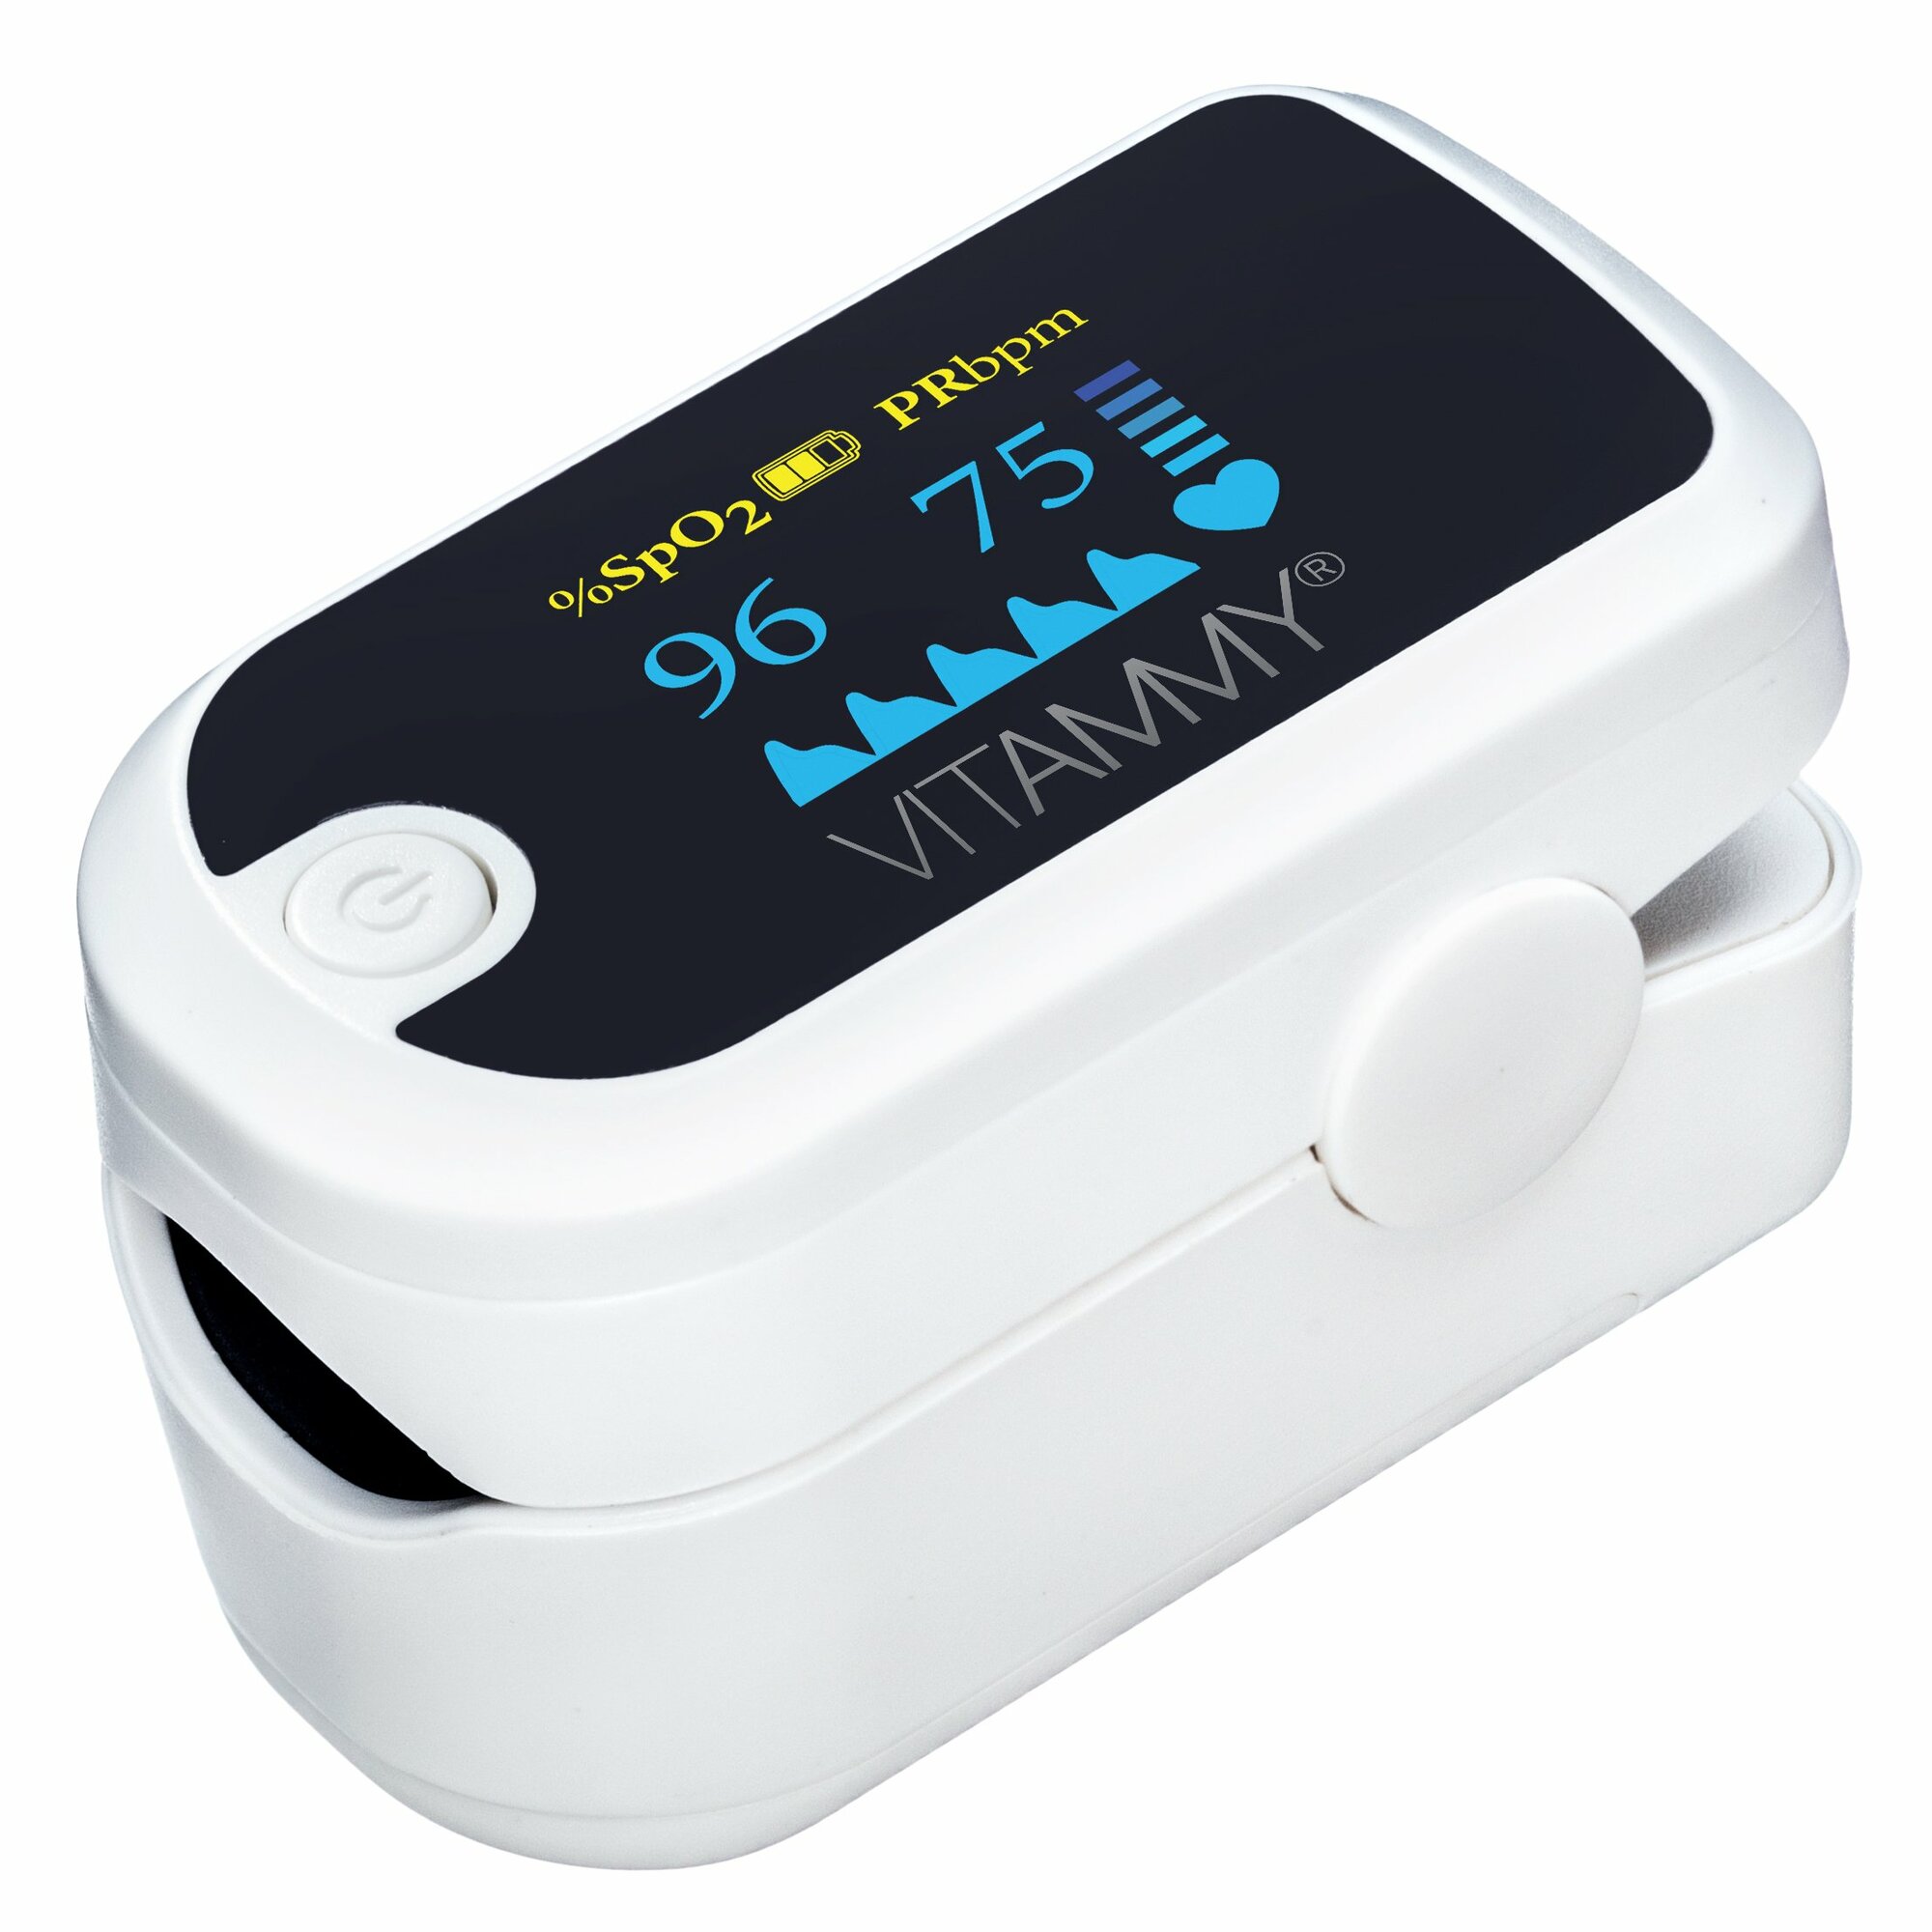 VITAMMY O2 Connect, Pulzný oxymeter s funkciou Bluetooth